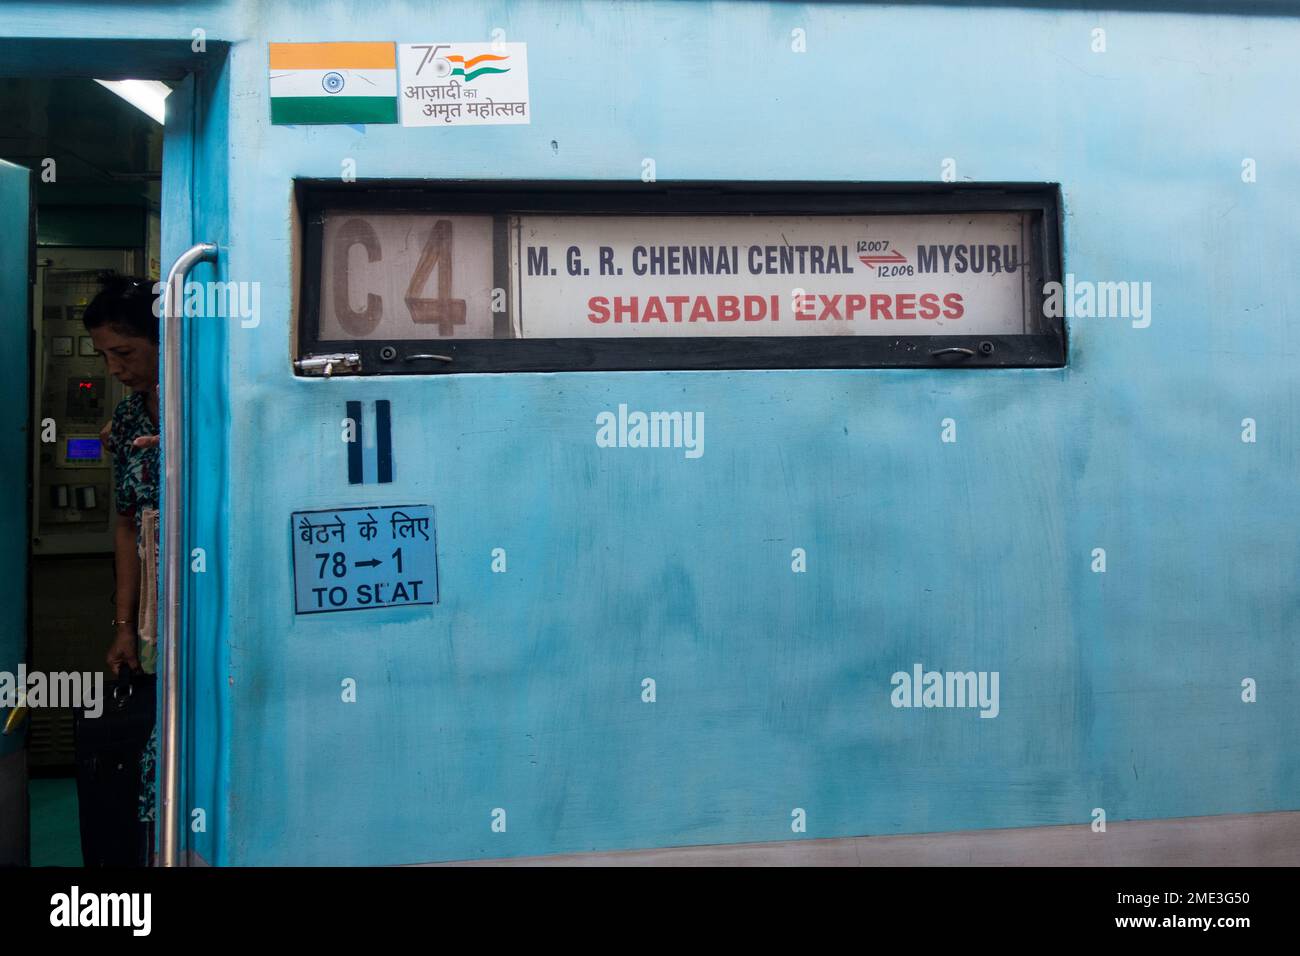 Treno espresso Shatabdi da Madras a Mysuru Foto Stock